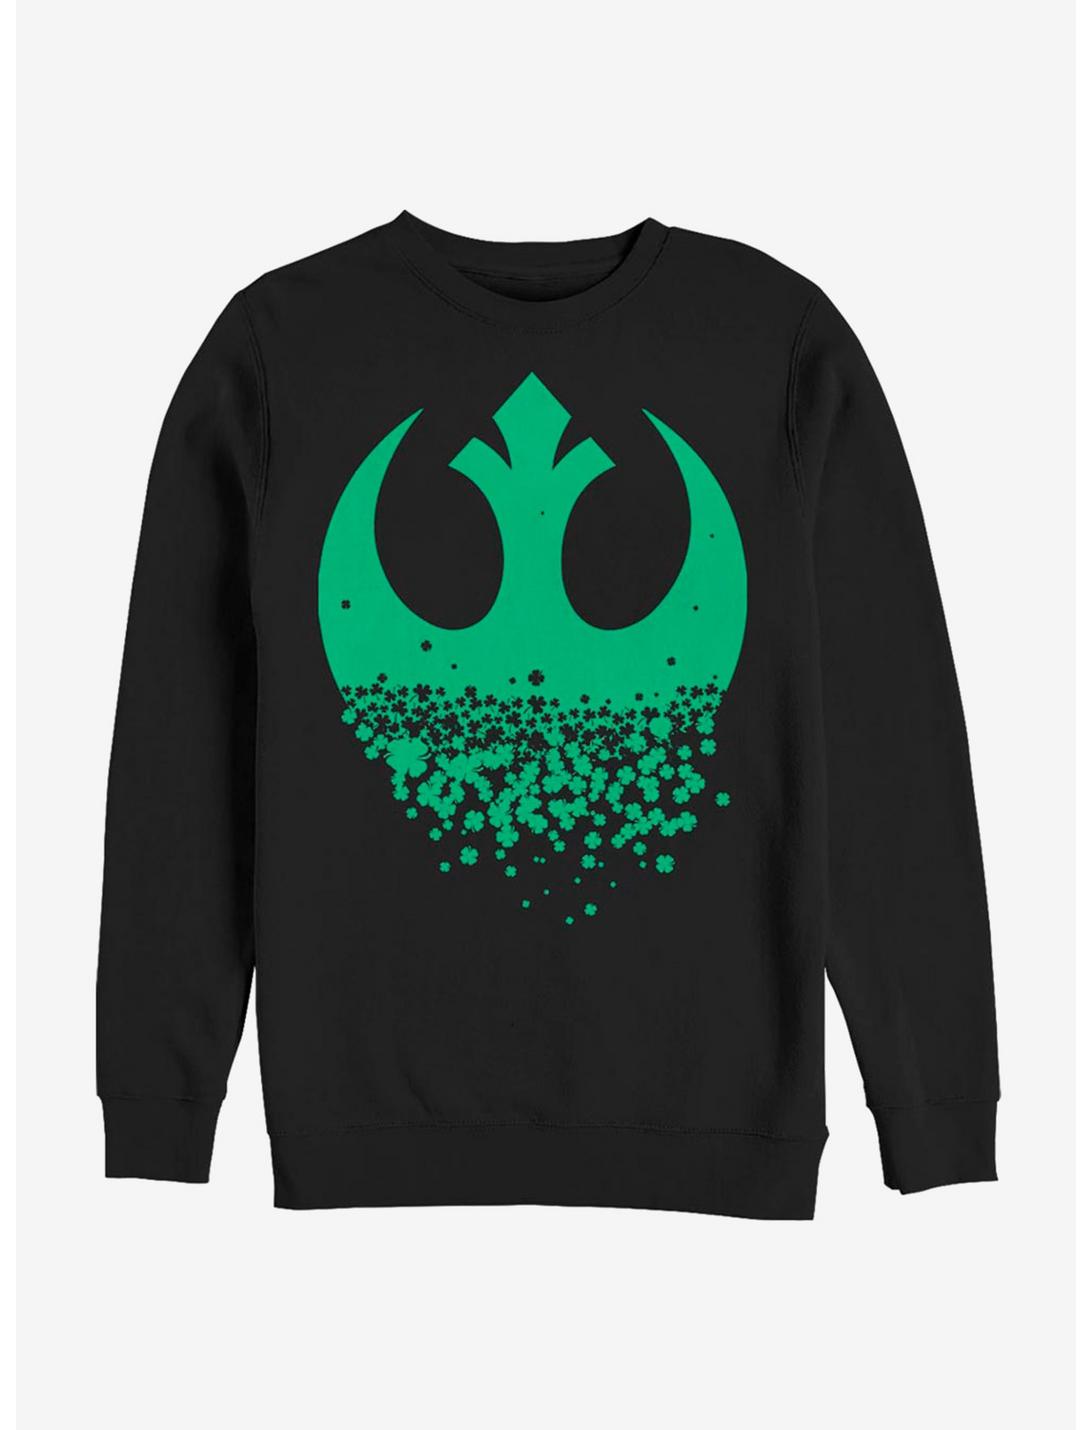 Star Wars Rebel Clover Sweatshirt, BLACK, hi-res